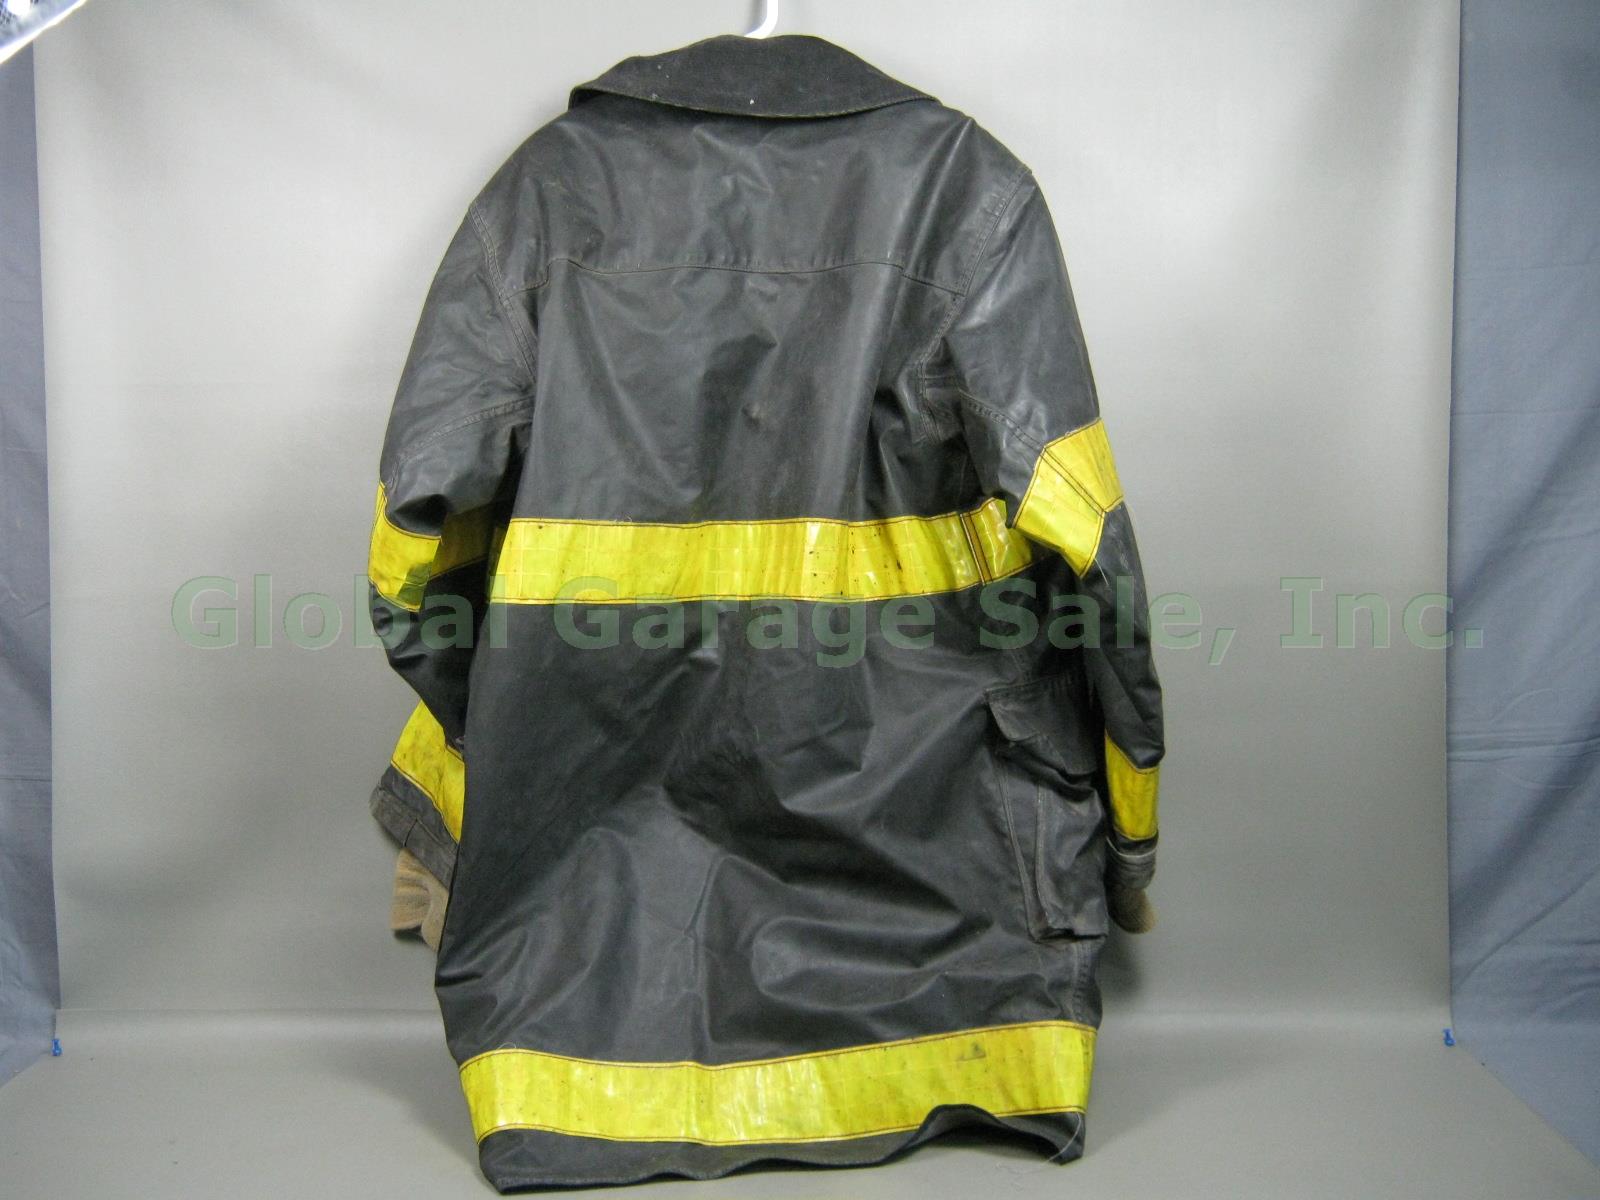 Fyrepel Chicago Illinois Firefighter Winter Turnout Bunker Jacket Coat 46-44 NR! 1